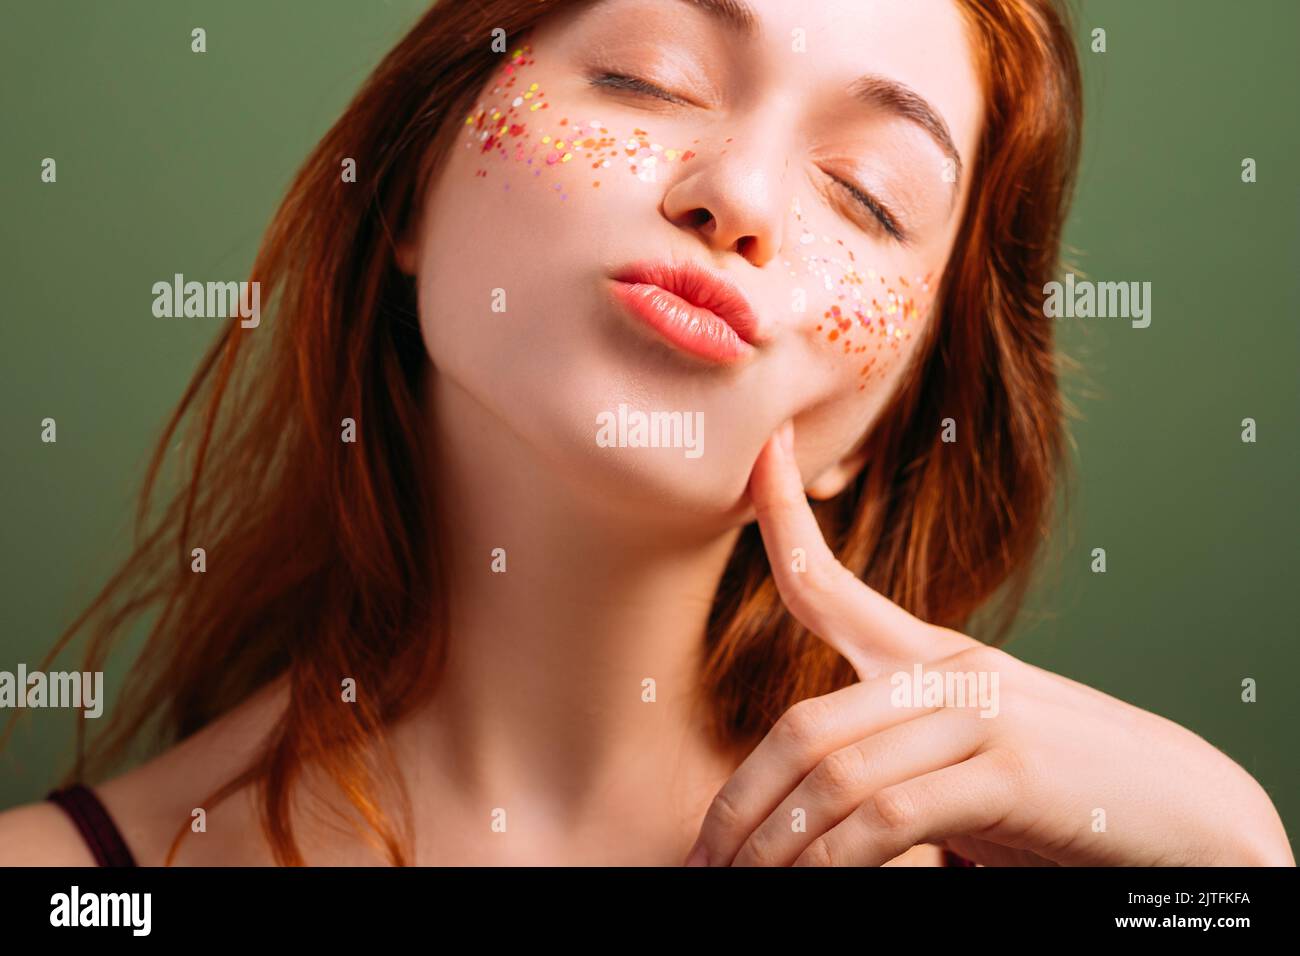 young beautiful female self esteem pout lips Stock Photo